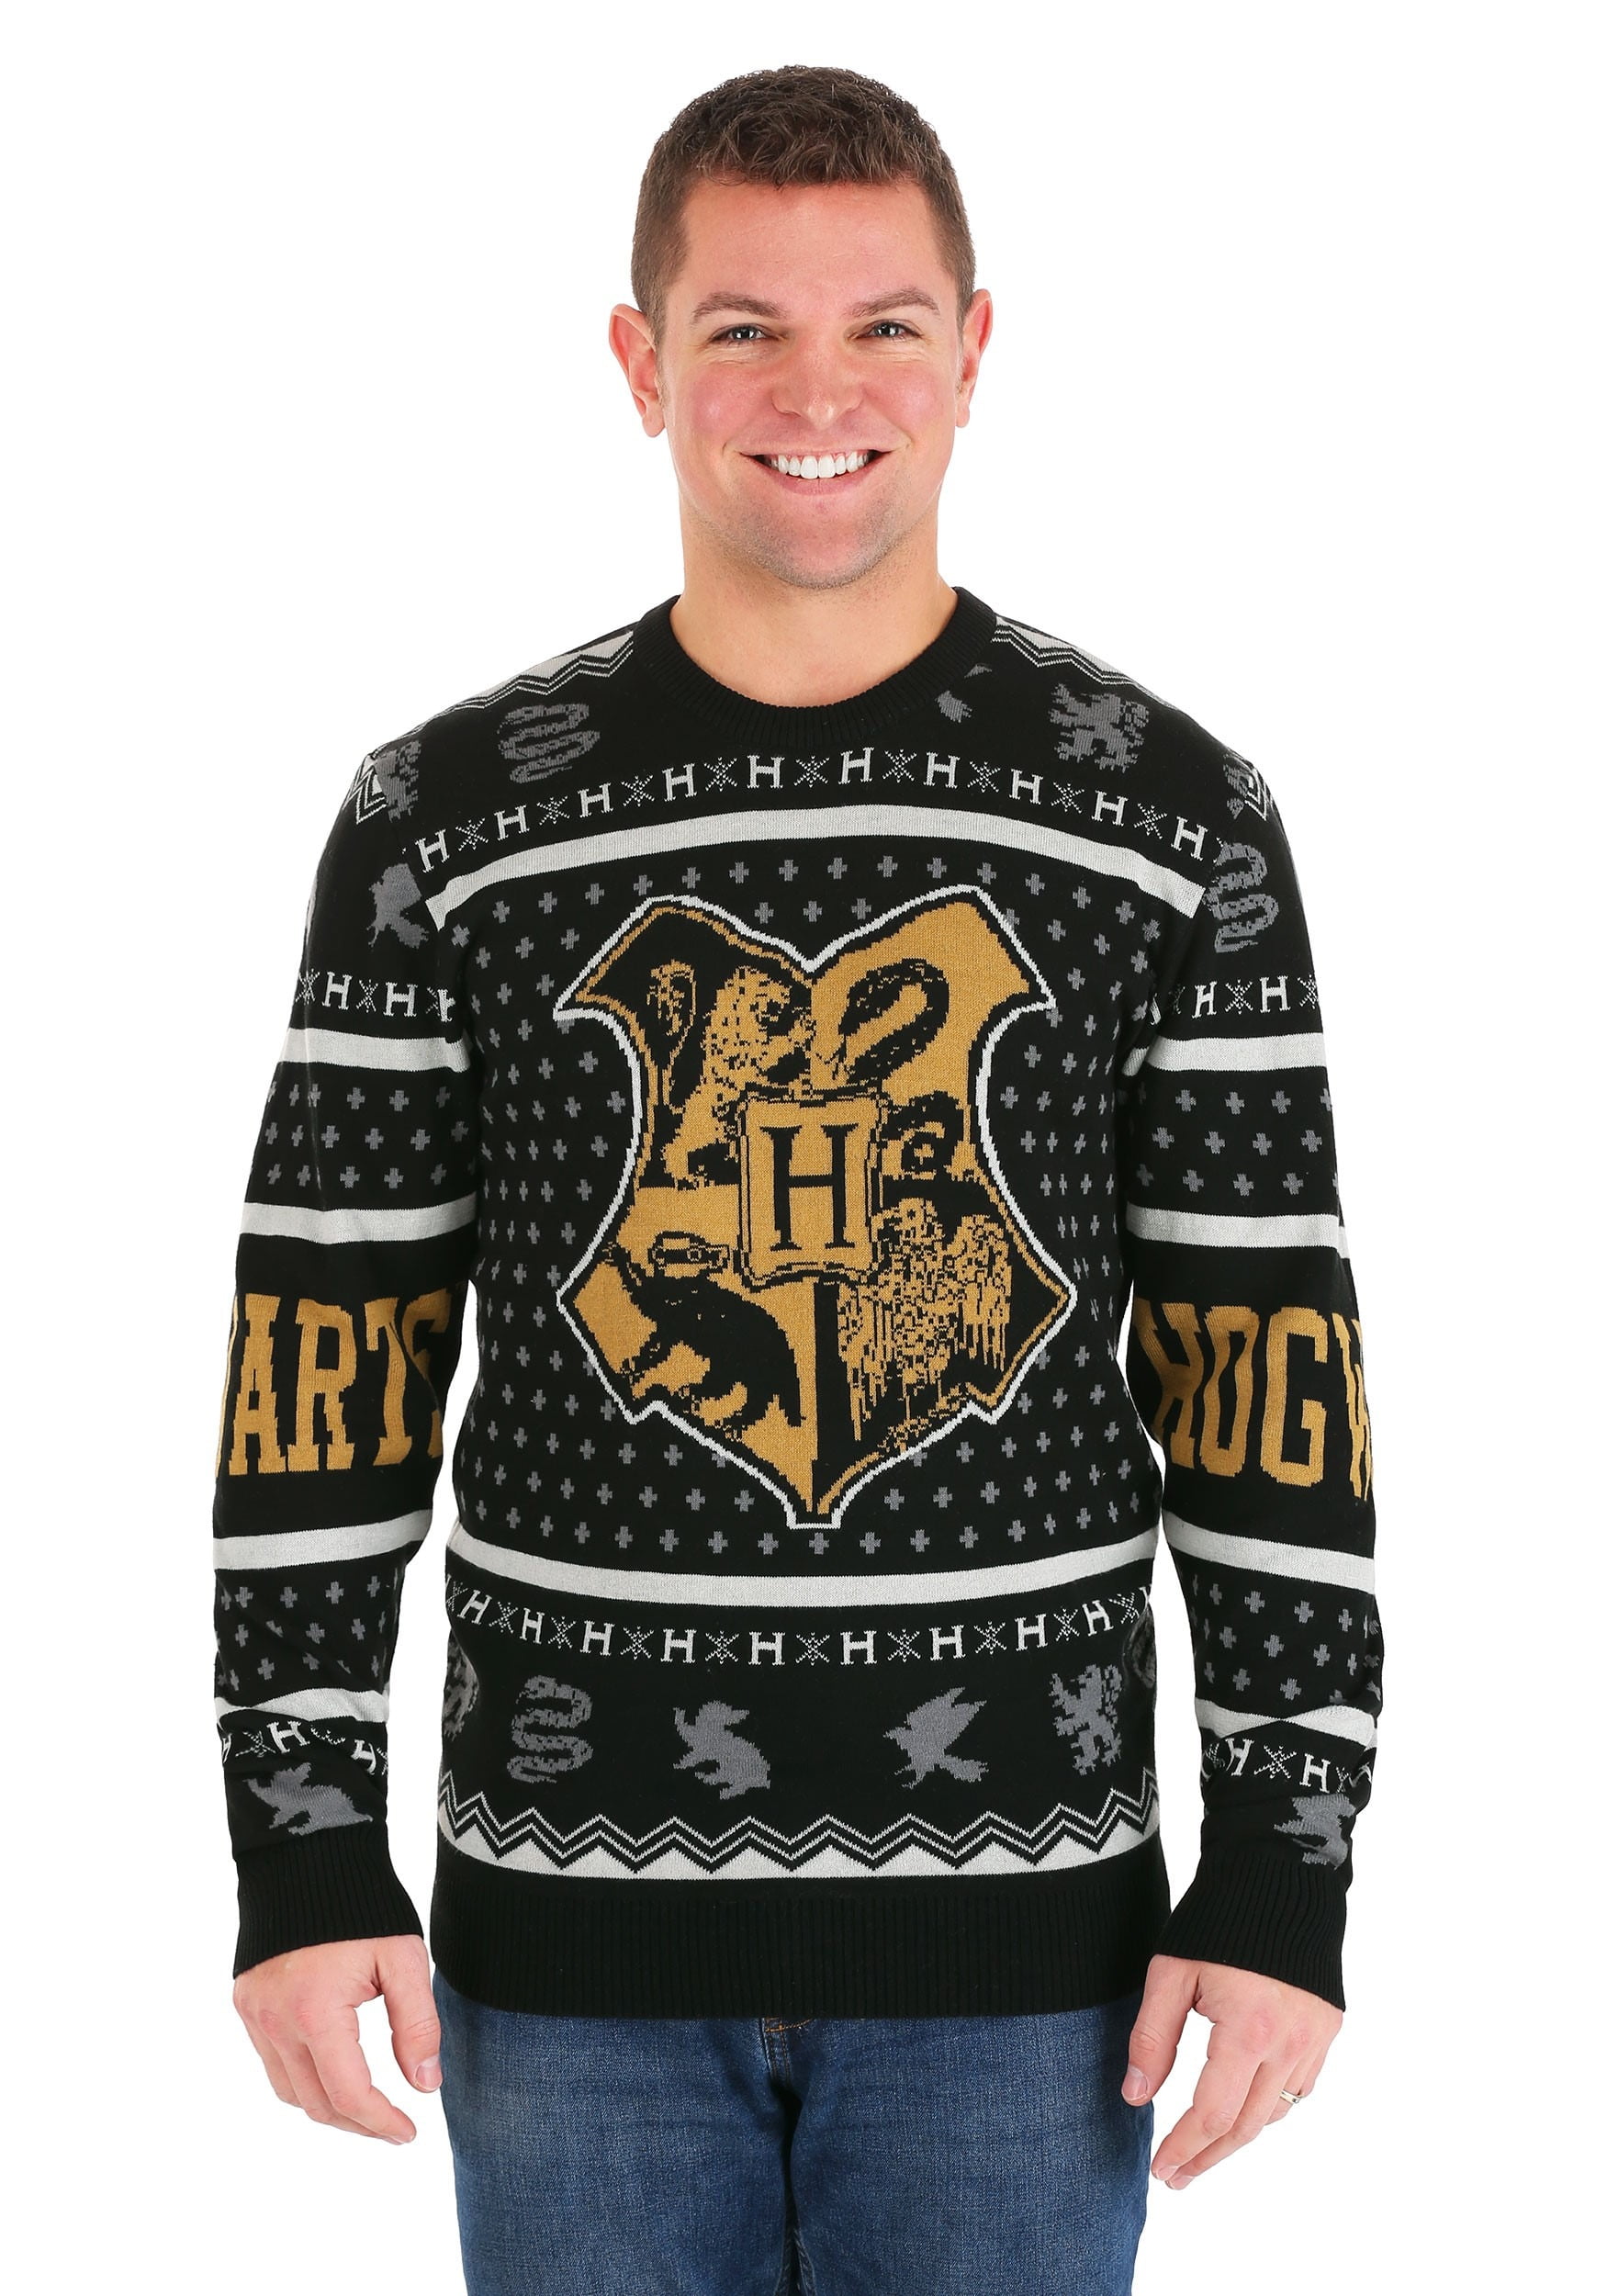 Harry Potter Hogwarts Ugly Christmas Sweater - Walmart.com - Walmart.com